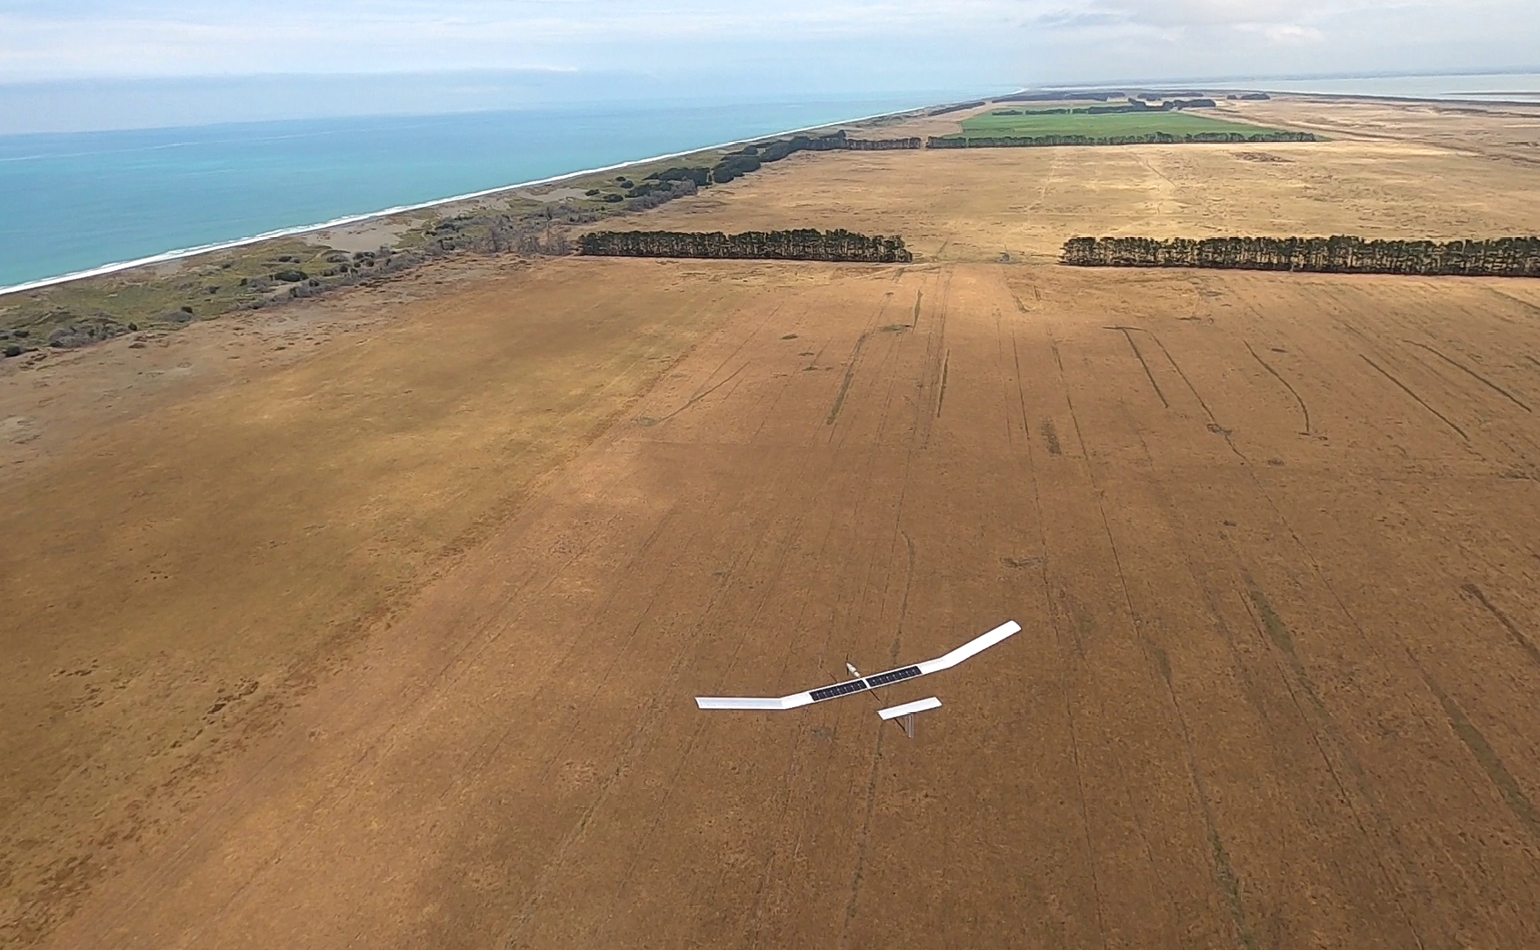 Glider flying over fields